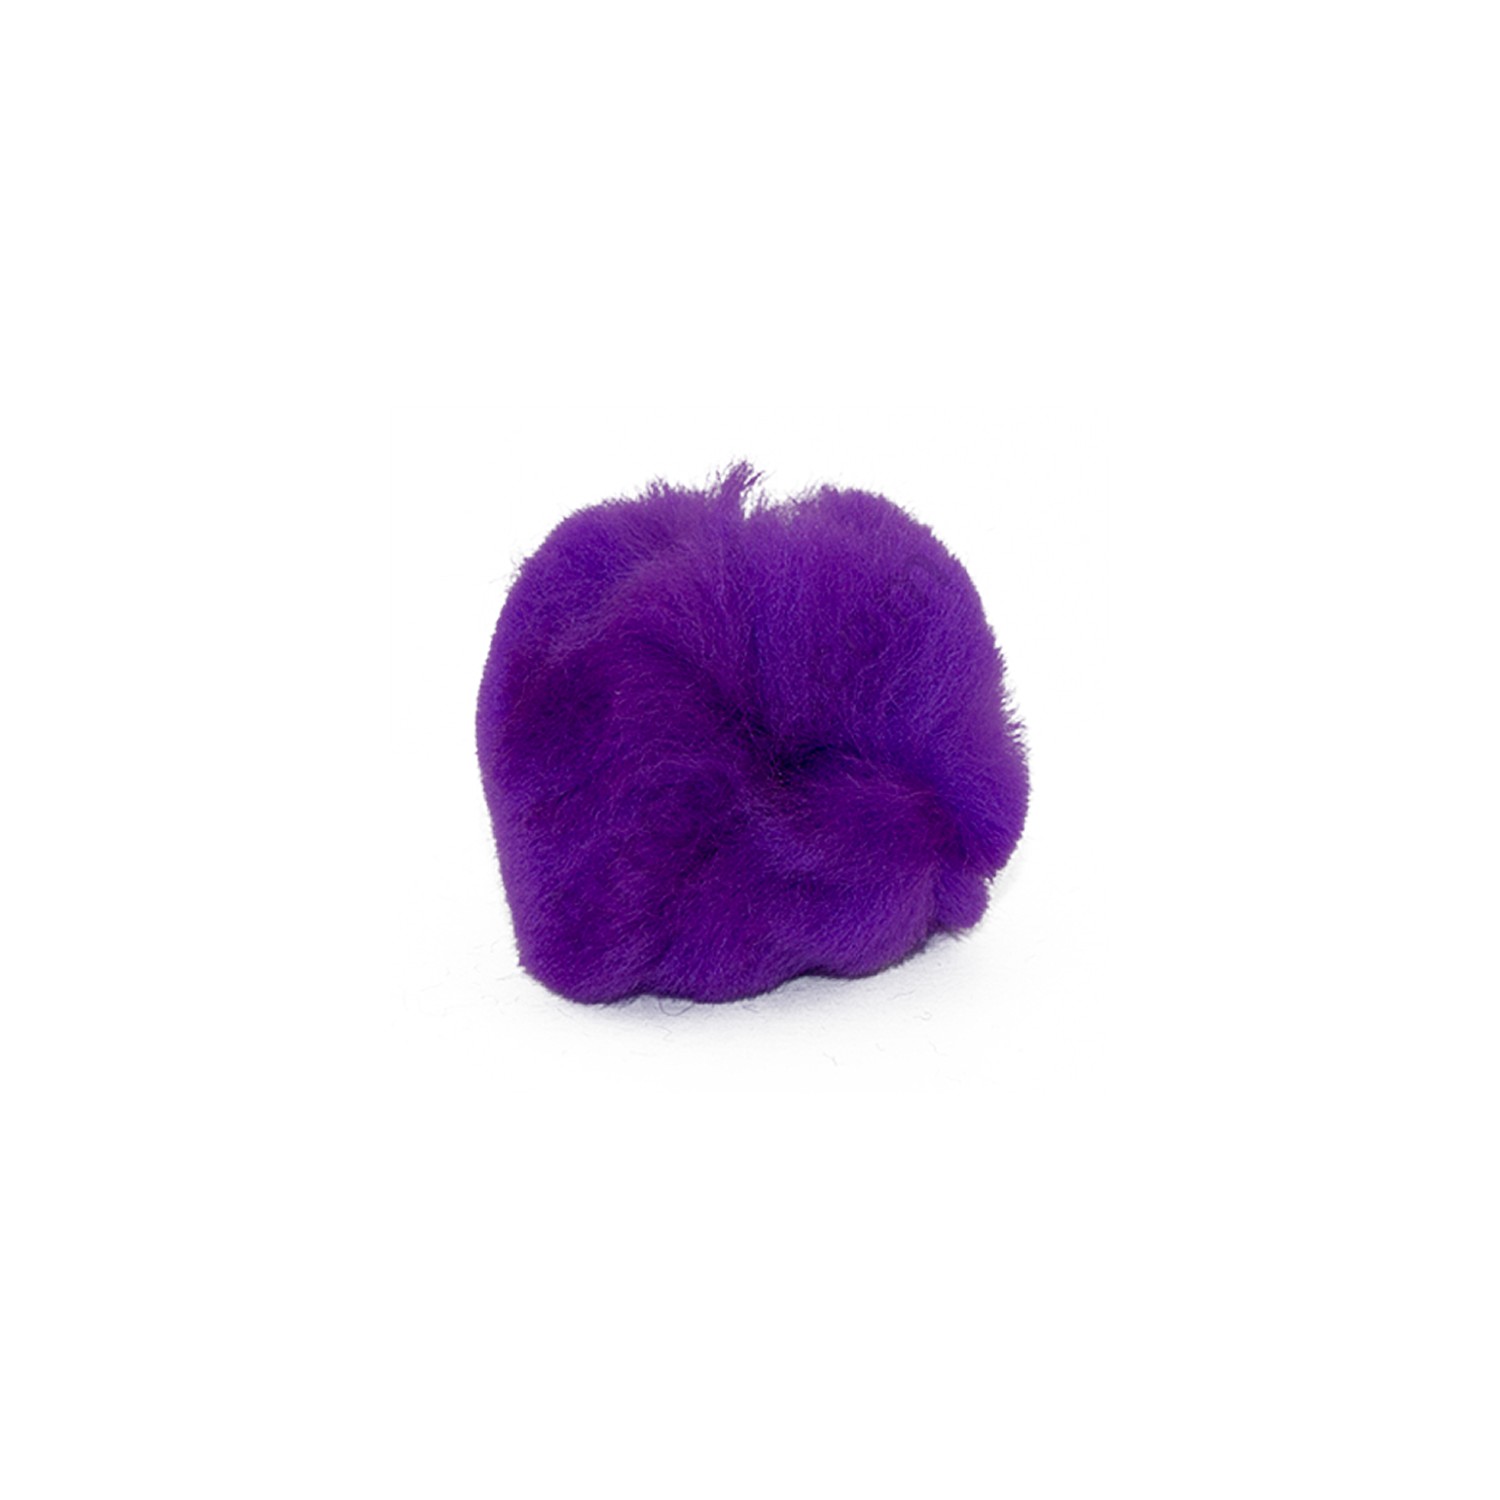 http://www.artcove.com/images/detailed/10/purple_craft_pom_pom_balls_bulk_2_inch_single.jpg